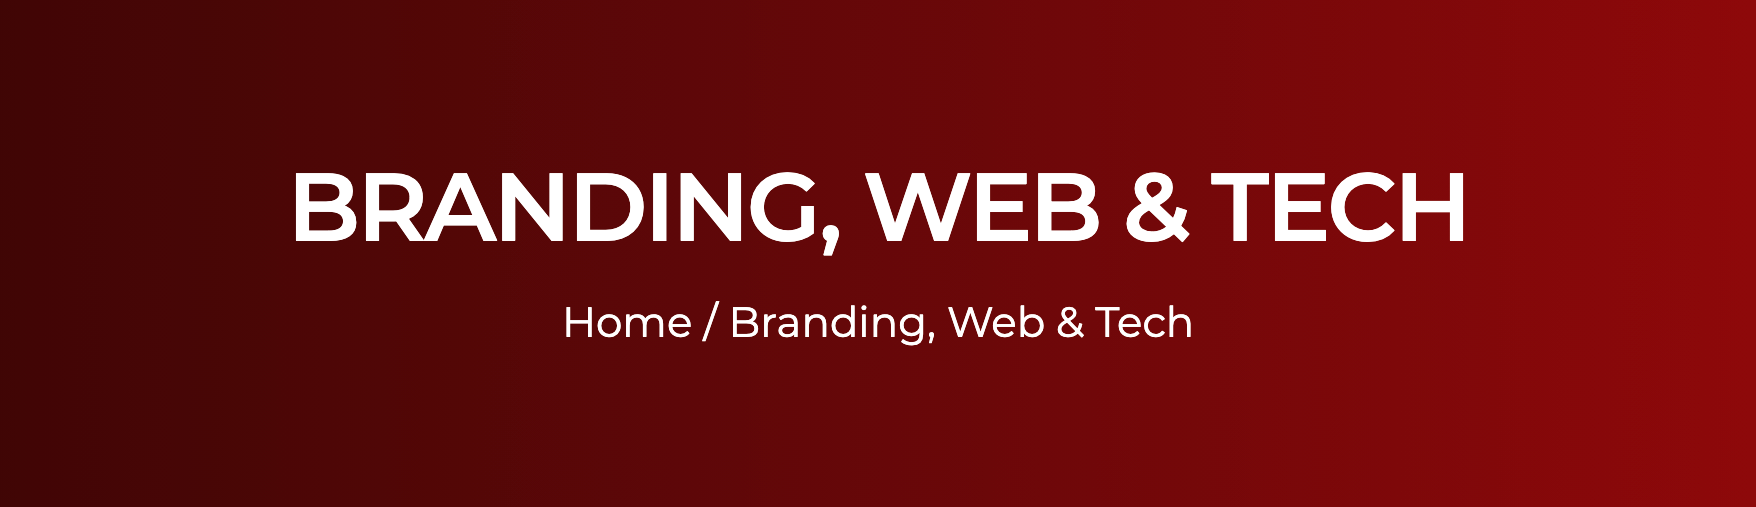 Branding, Web & Tech